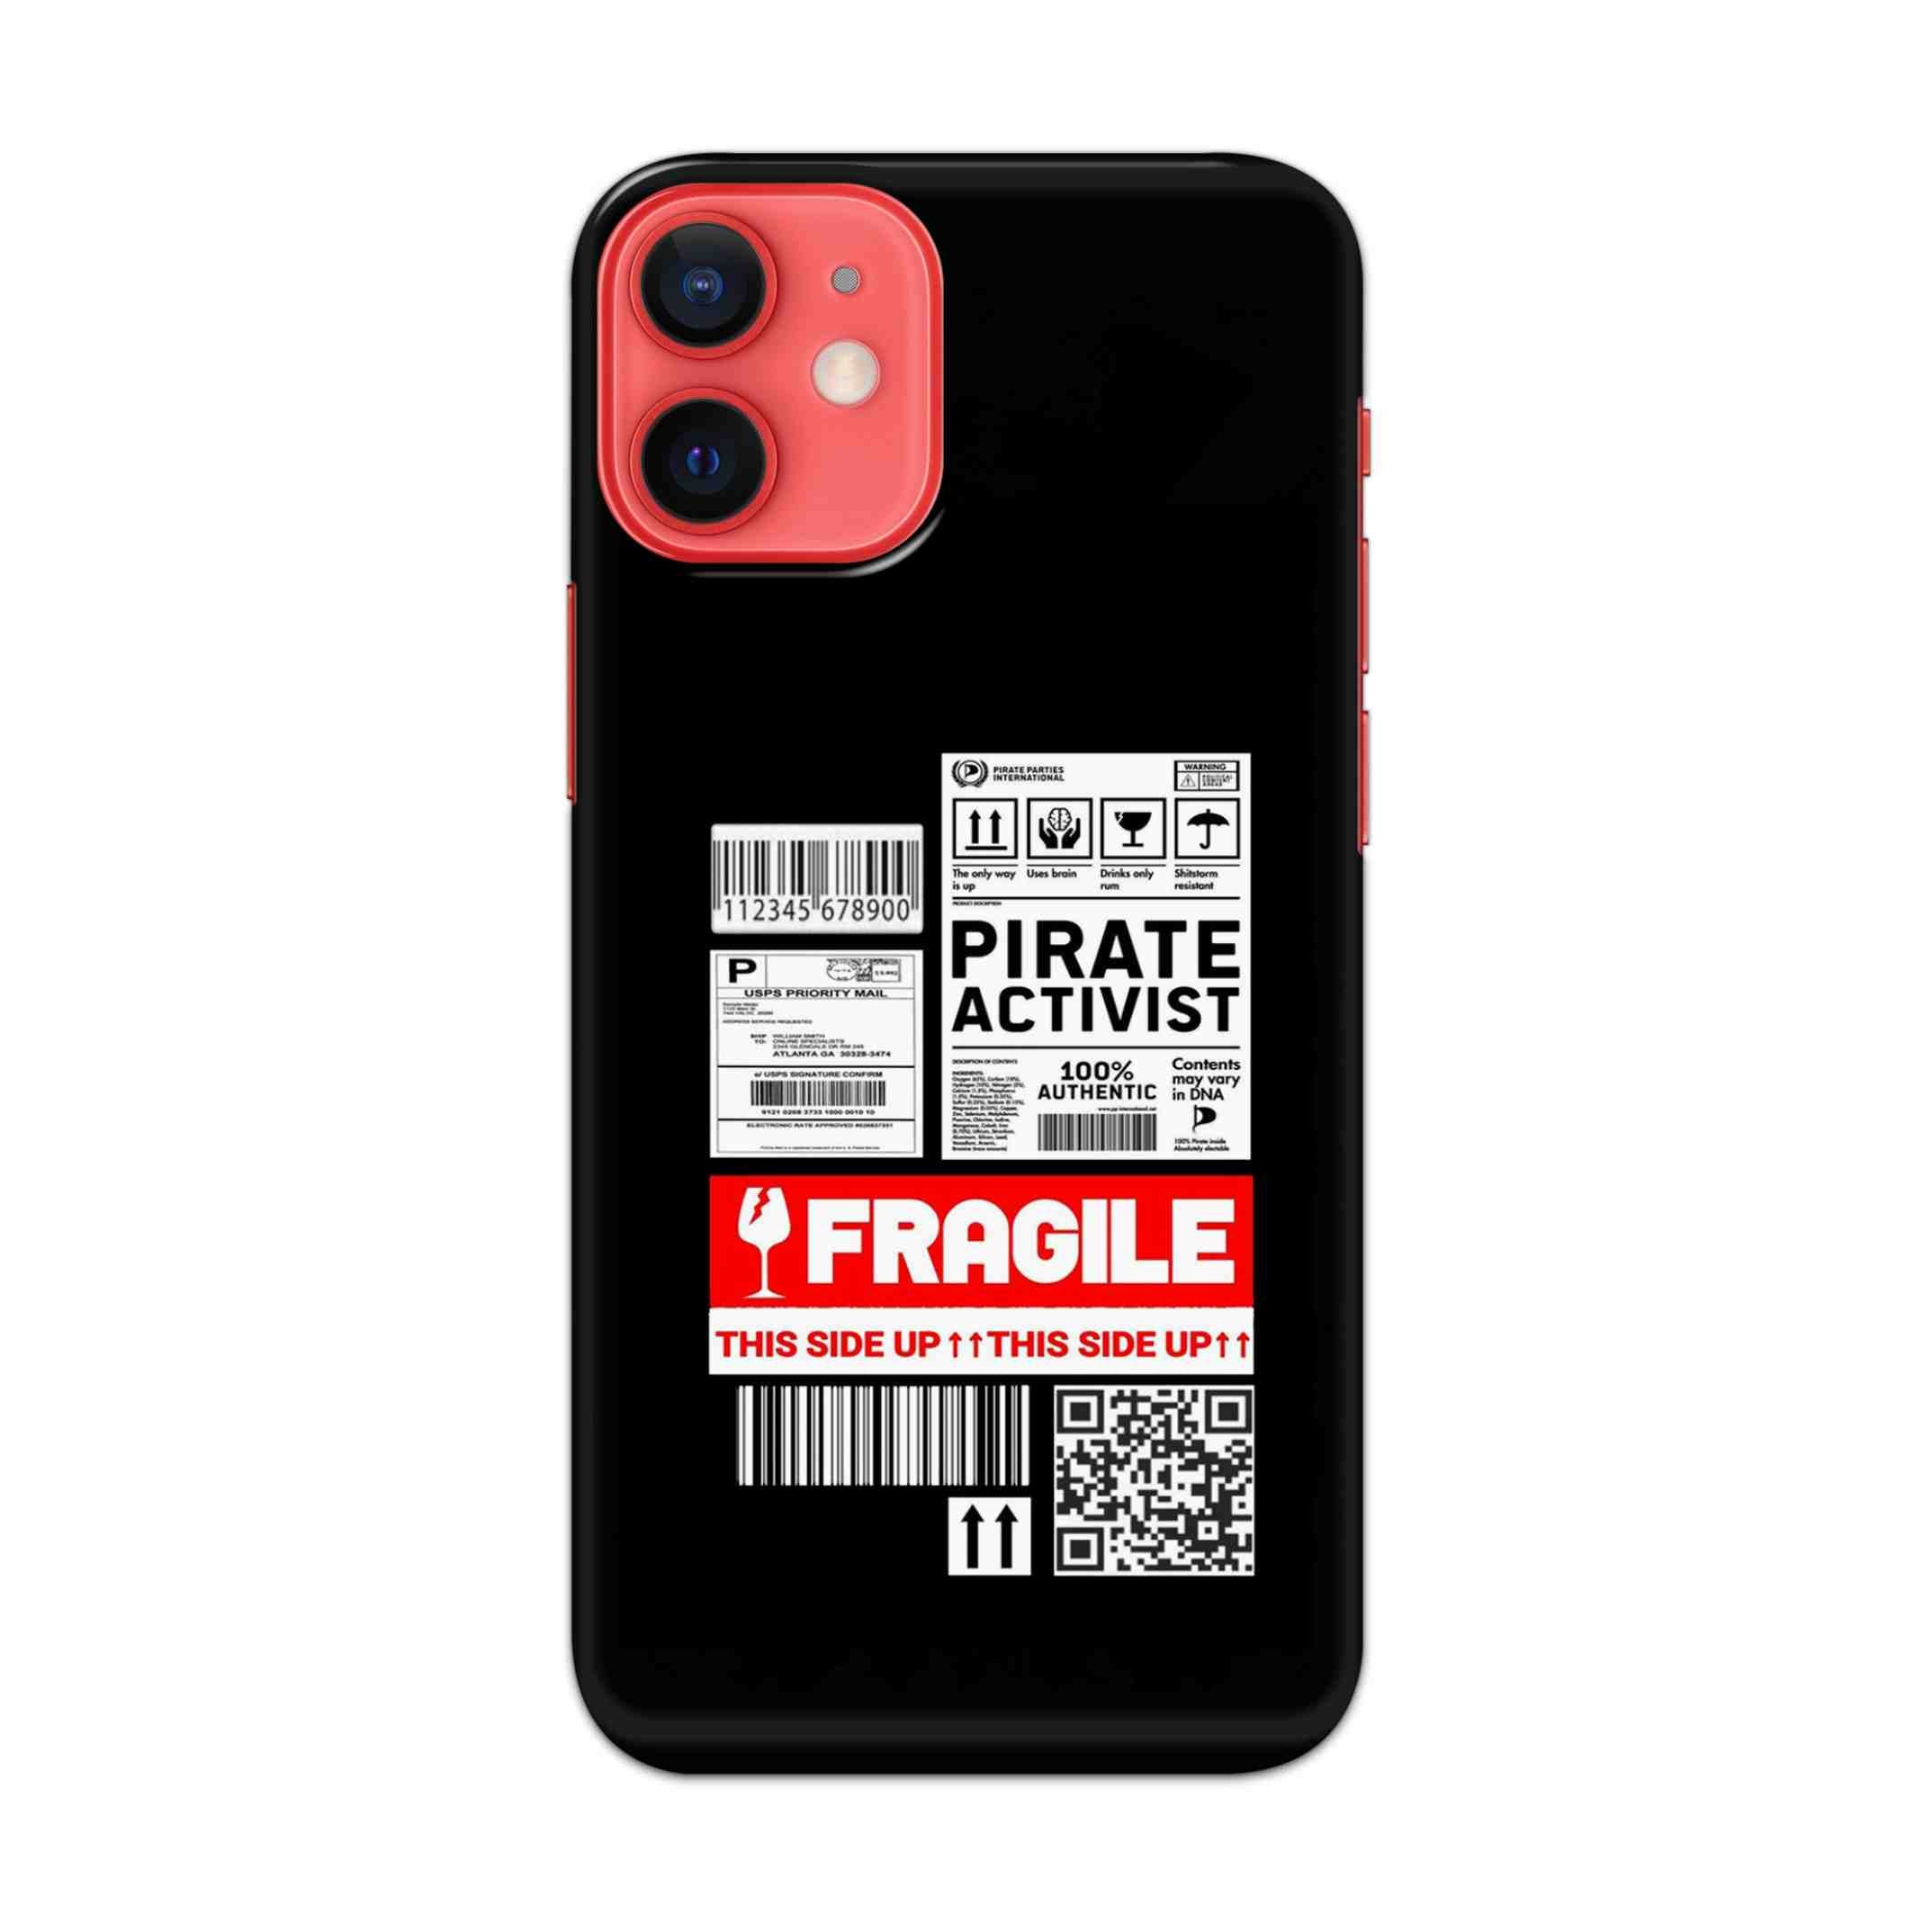 Buy Fragile Hard Back Mobile Phone Case/Cover For Apple iPhone 12 Online